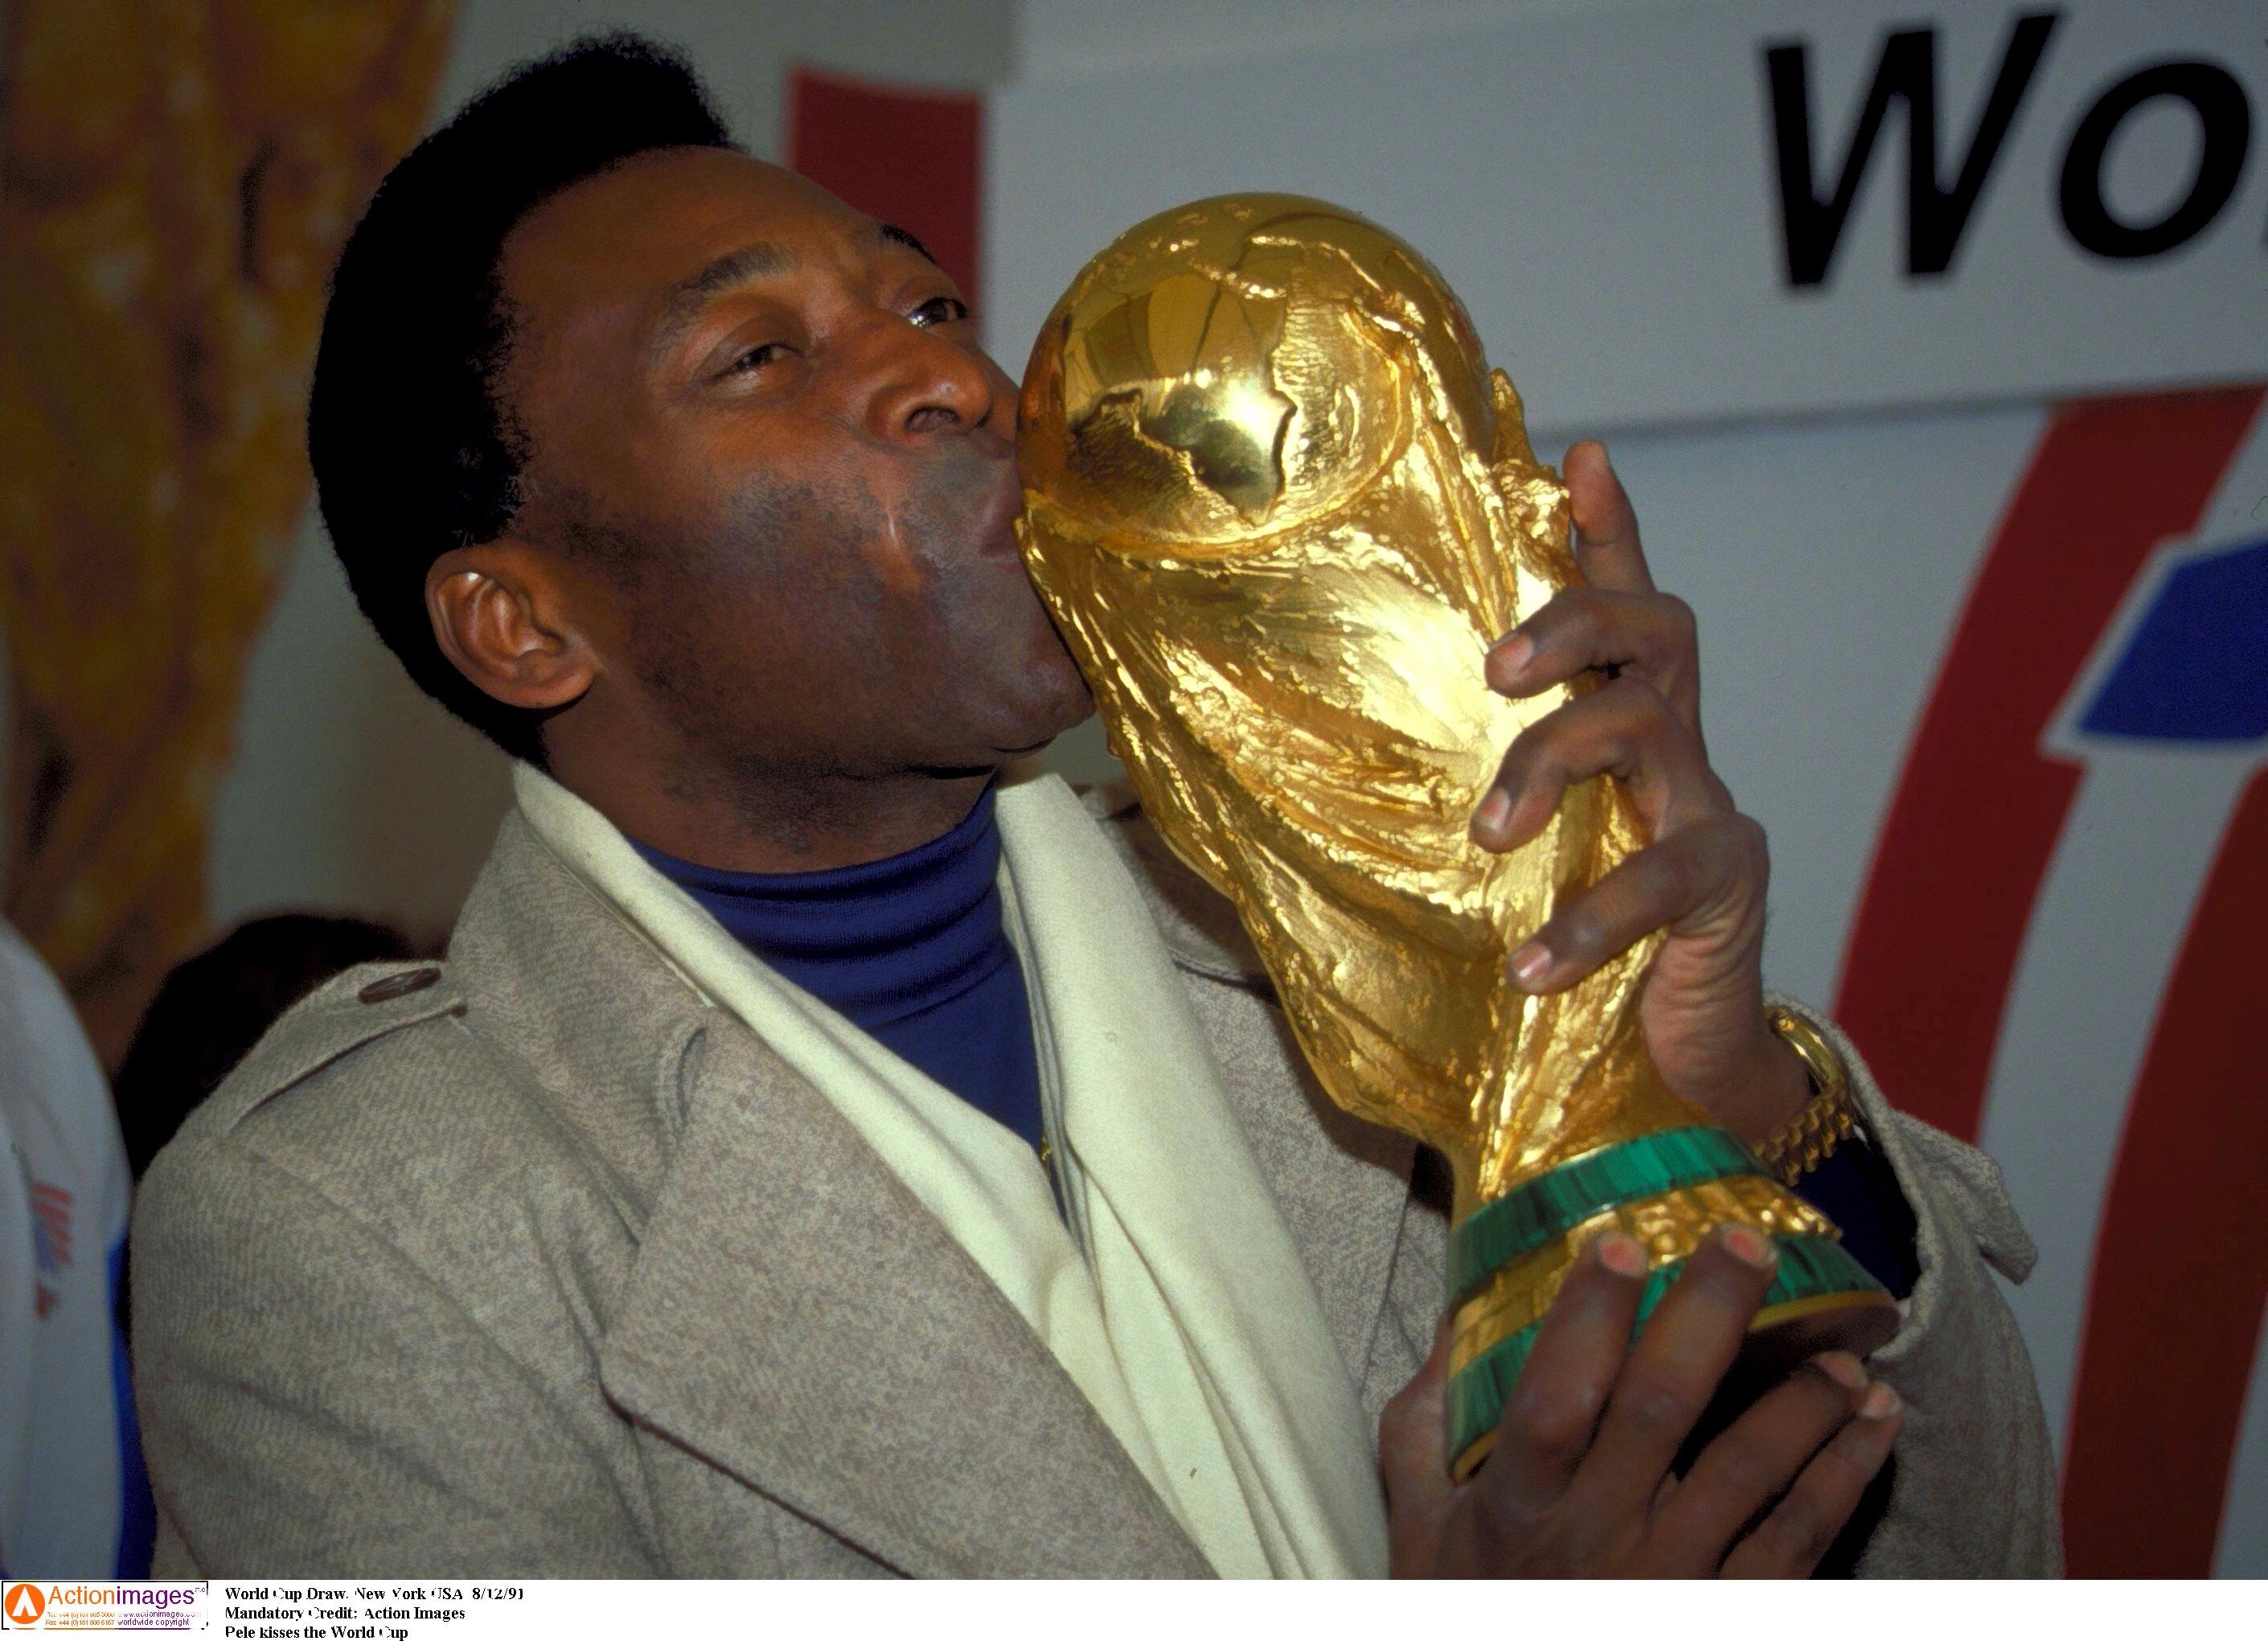 Pele kisses the World Cup trophy.